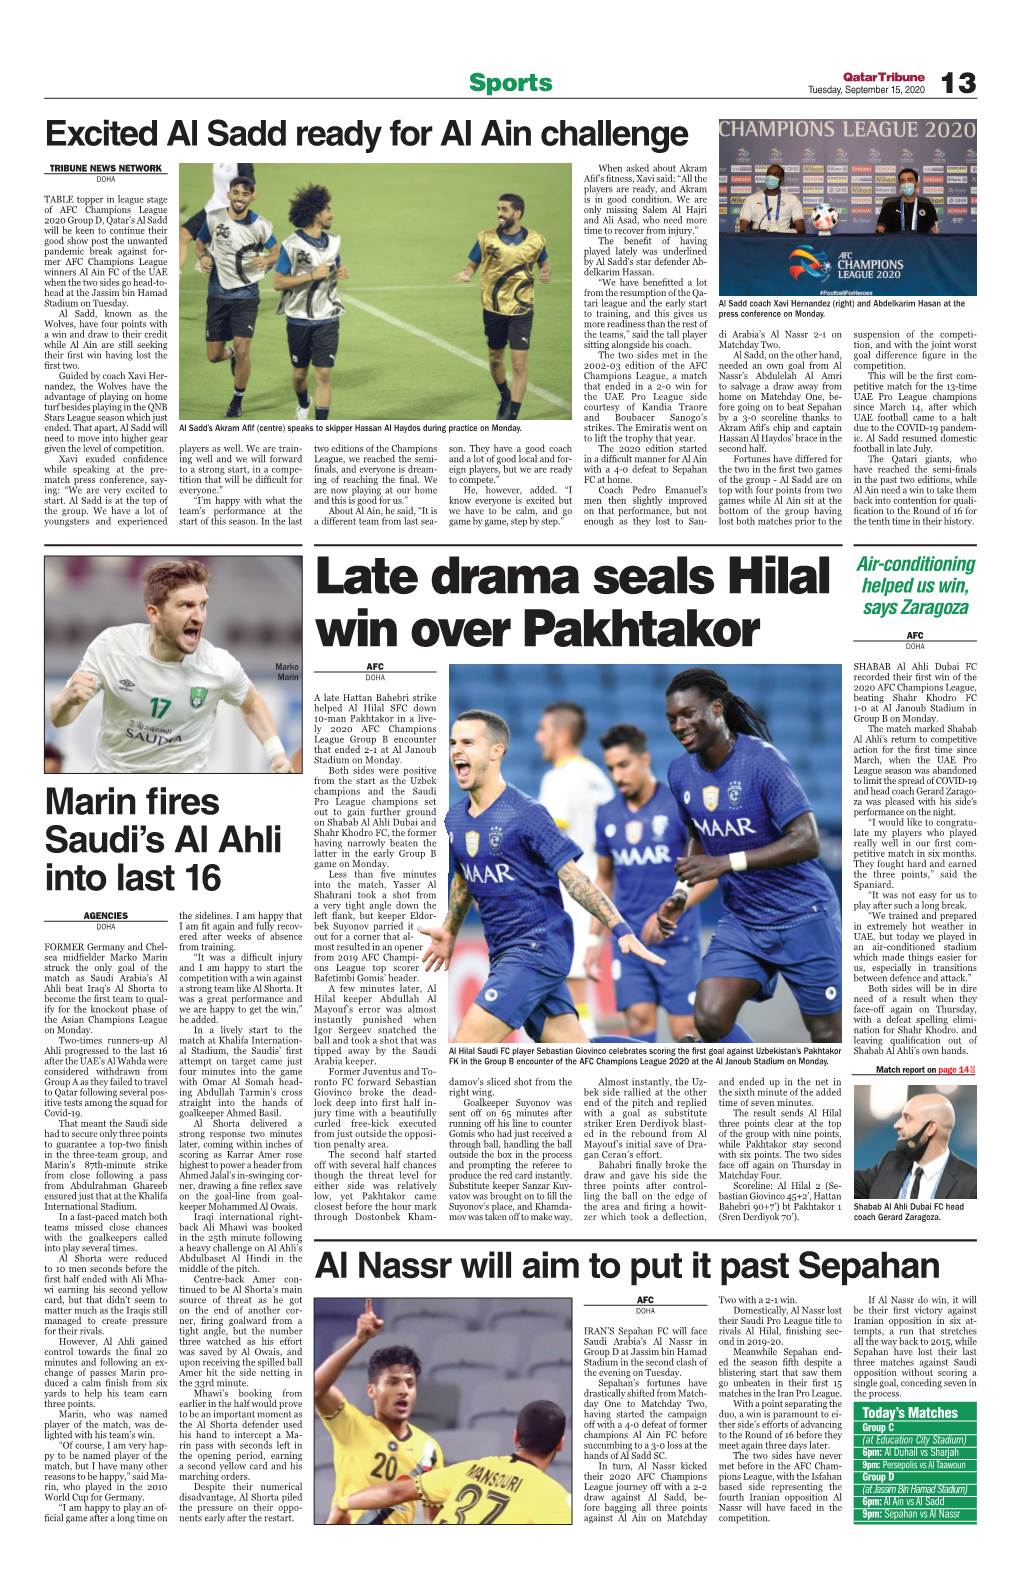 Late Drama Seals Hilal Win Over Pakhtakor